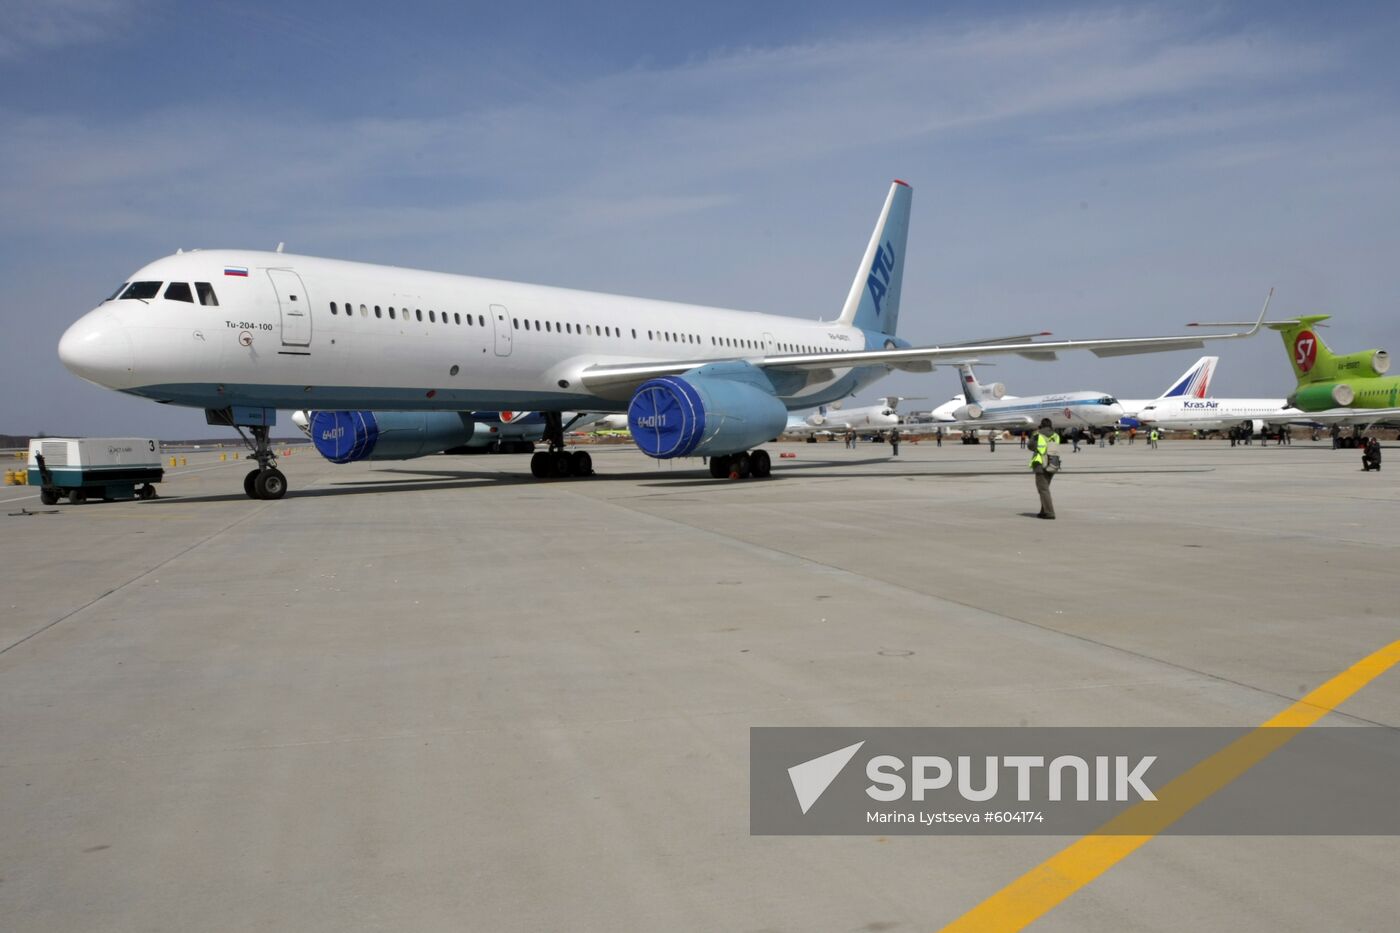 Aviastar-TU plane makes emergency landing